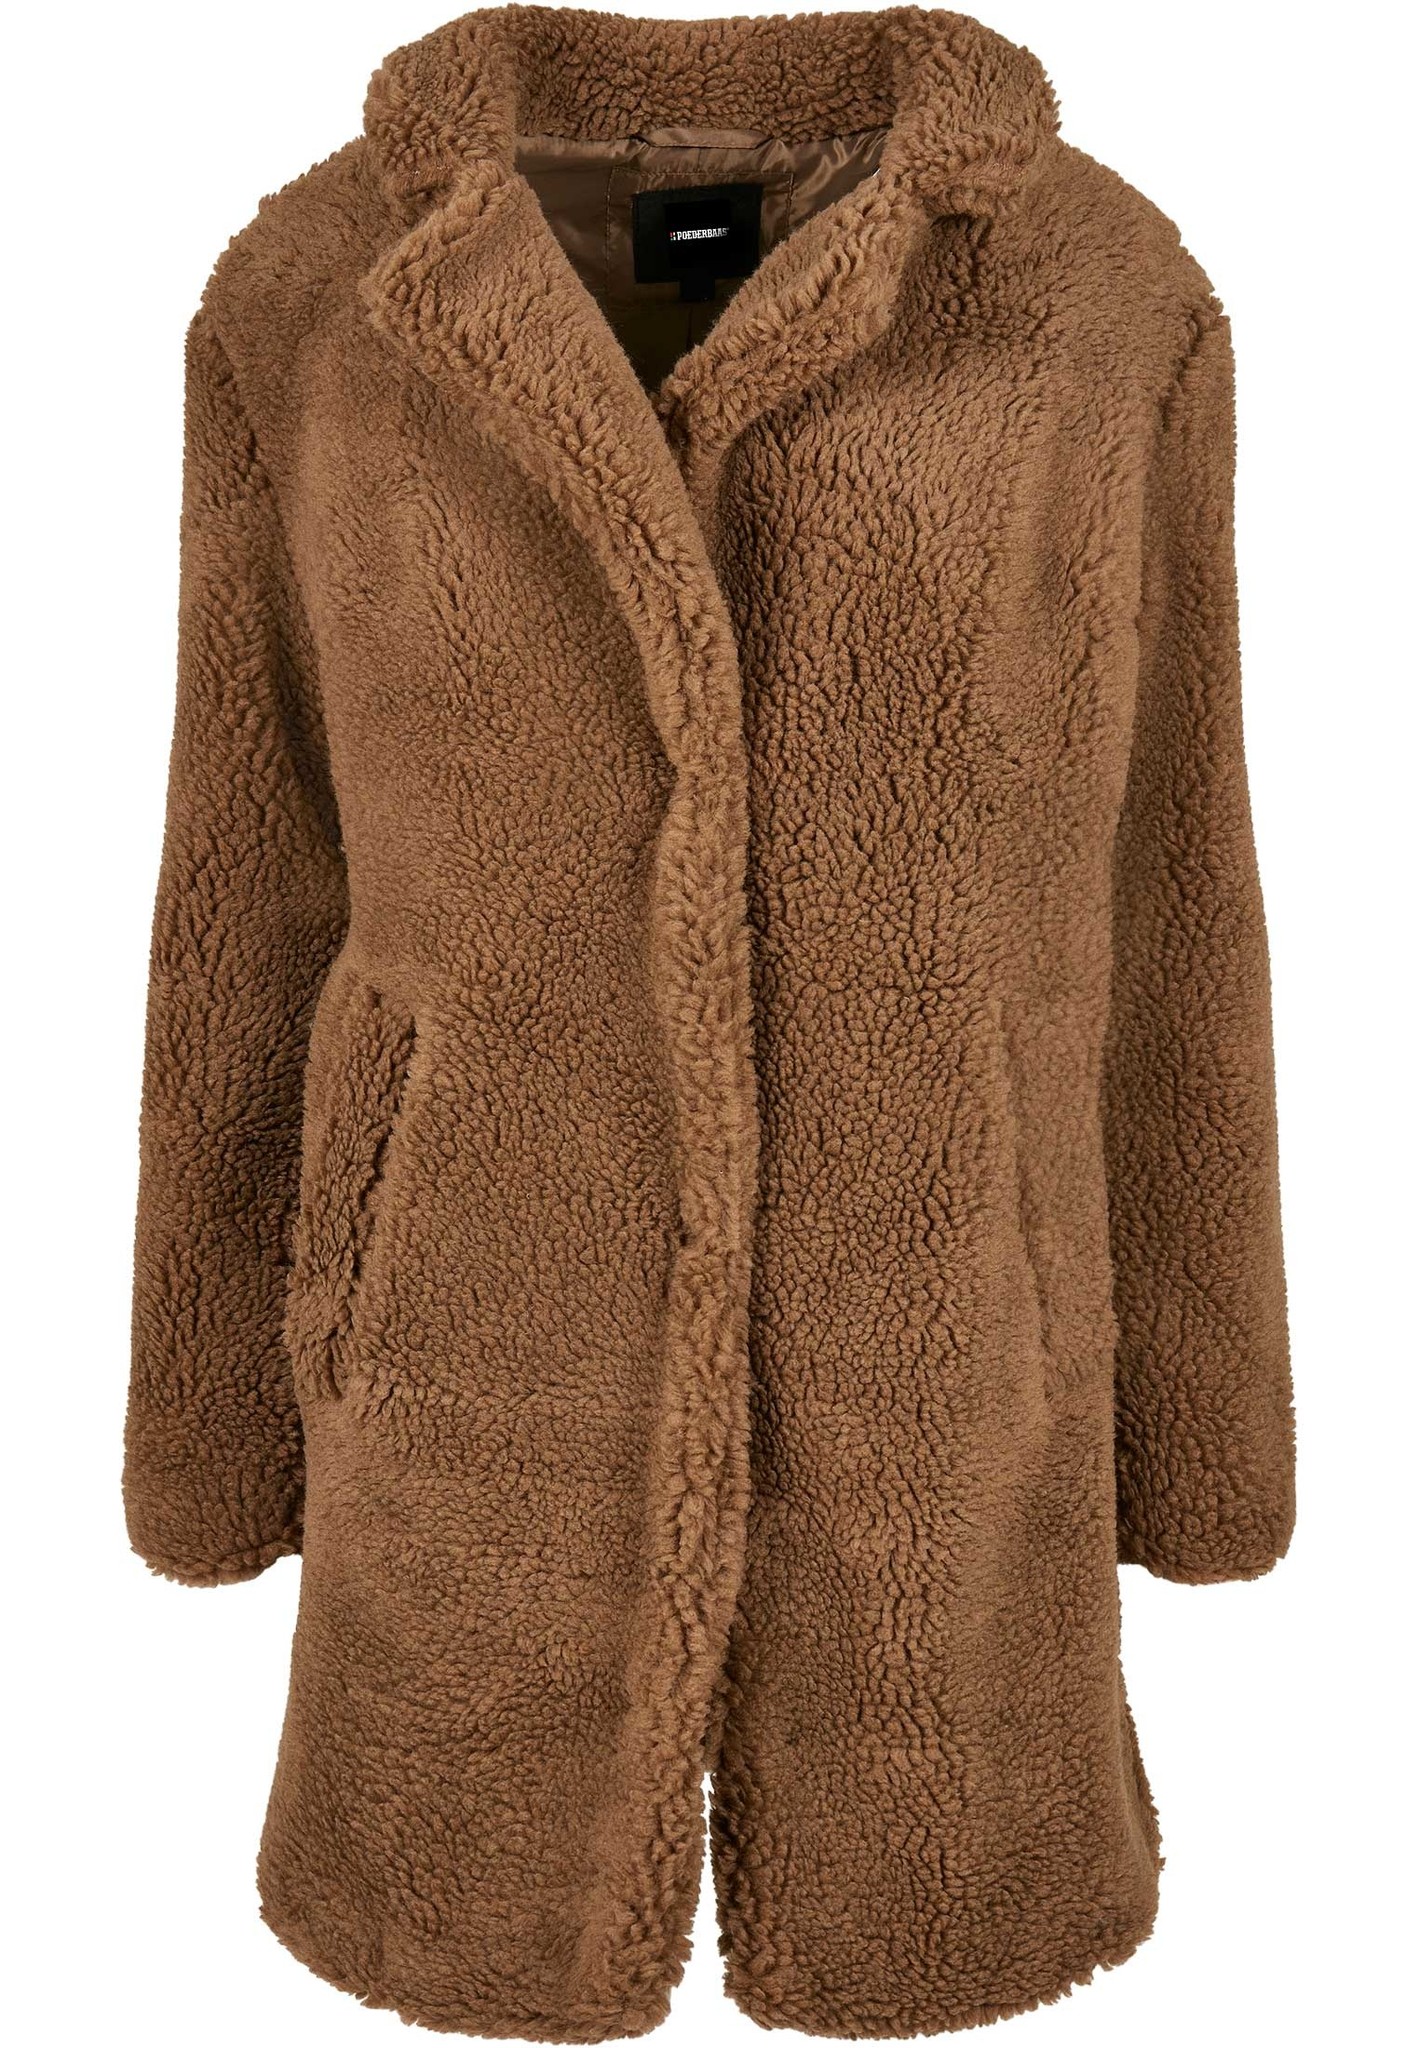 Oversized Sherpa Coat - Sepia Brown